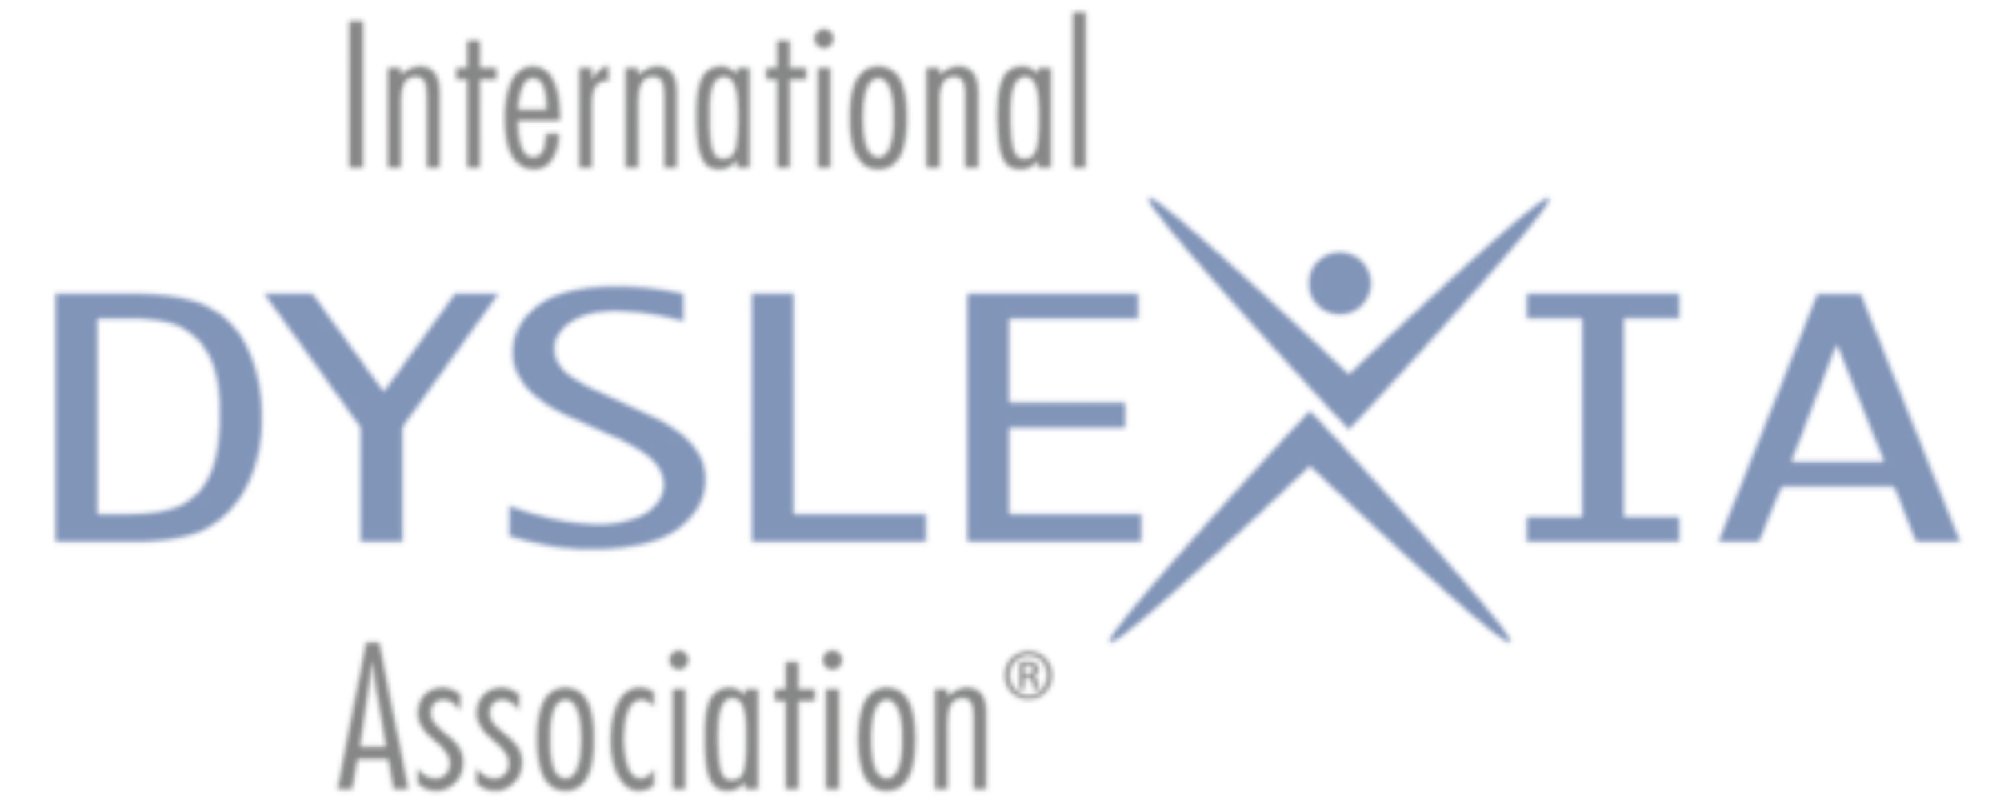 International Dyslexia Association logo